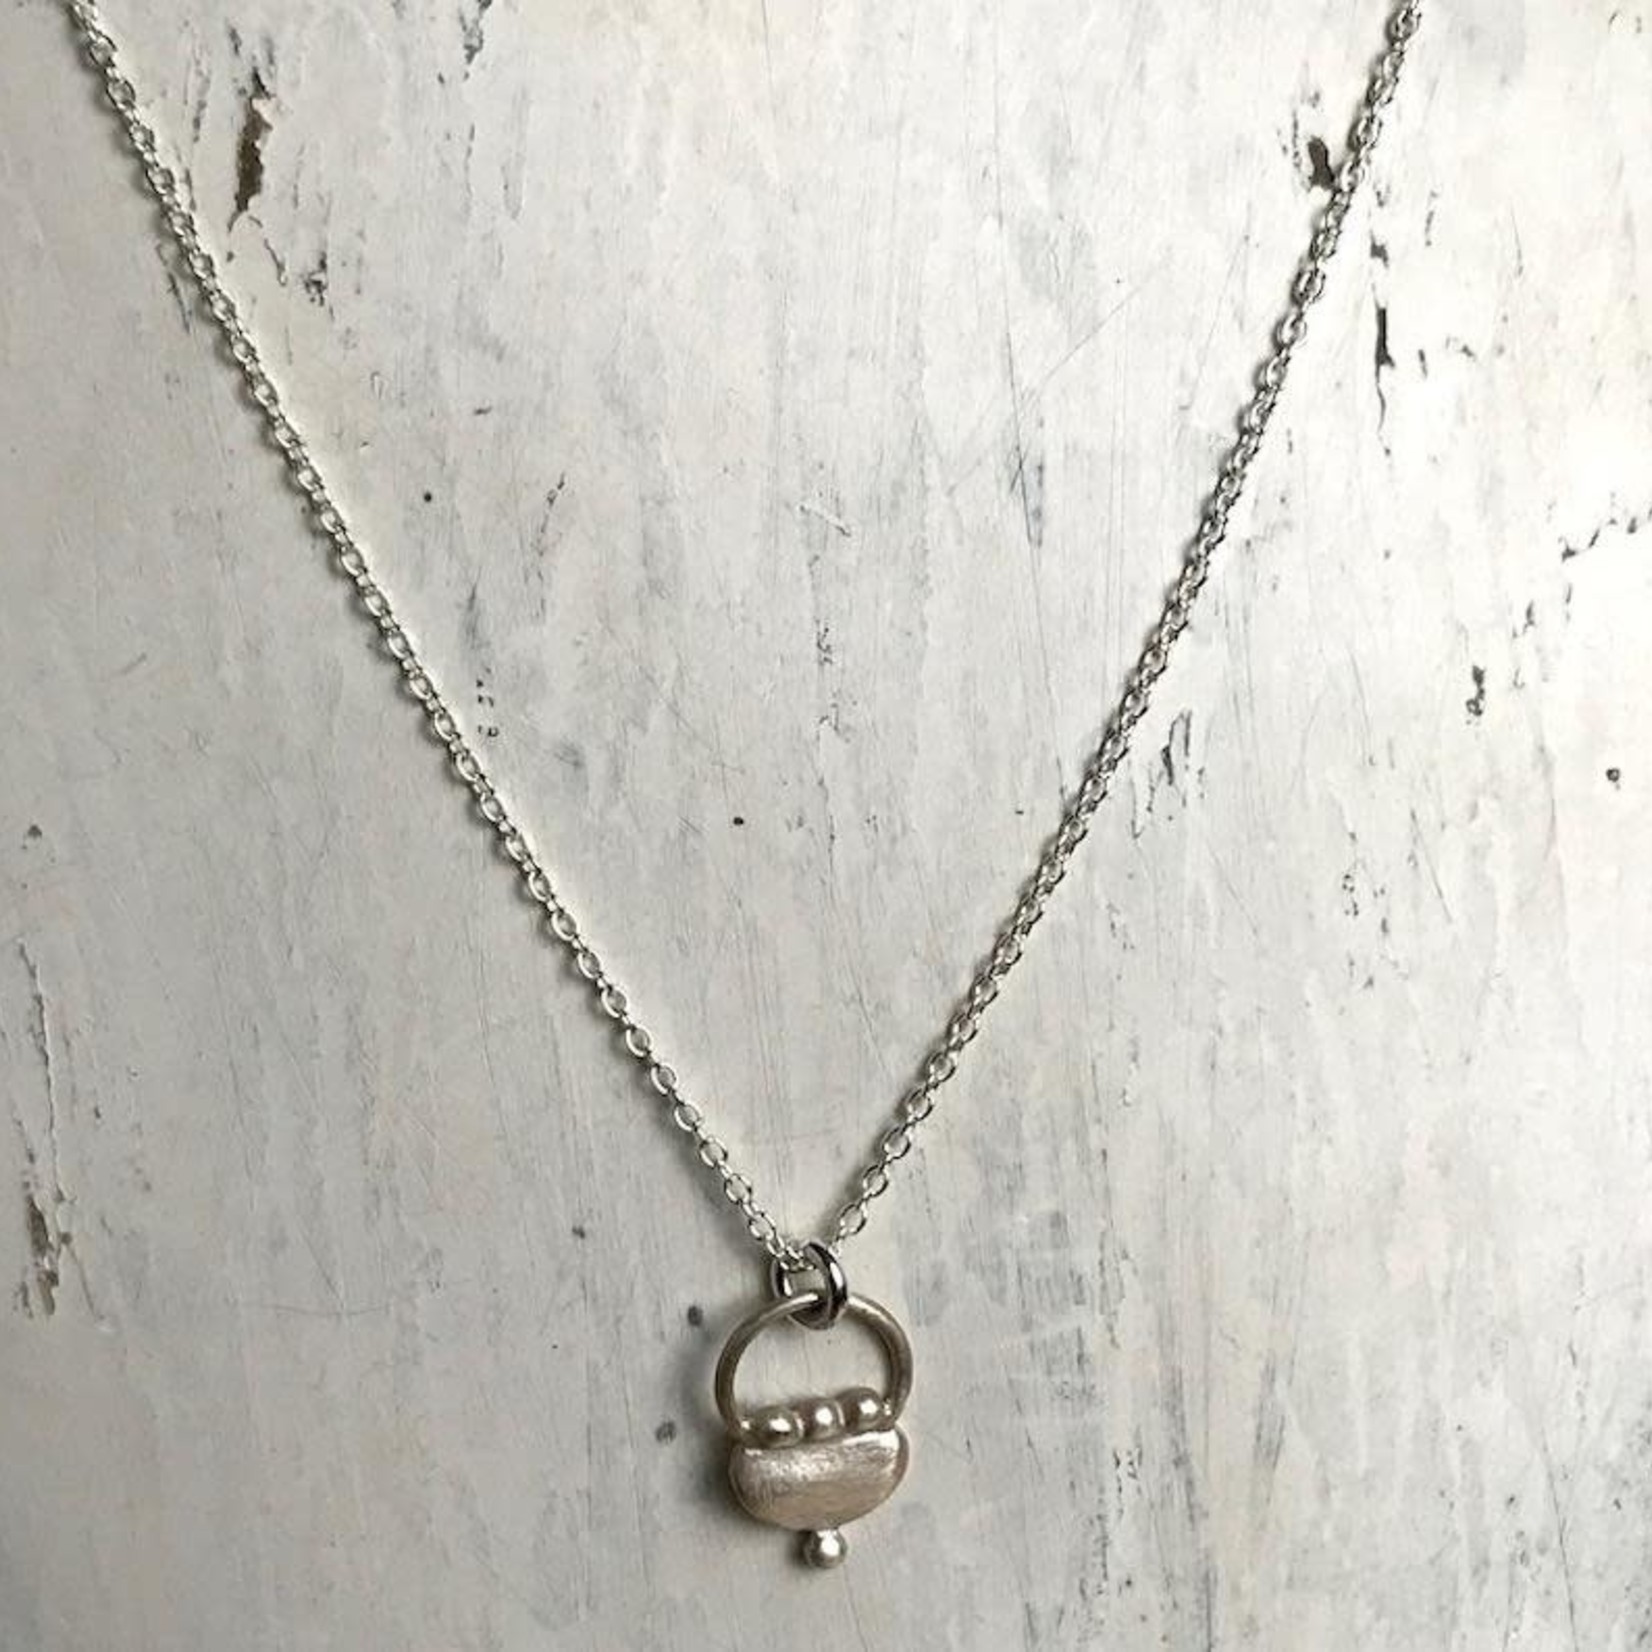 Handmade Silver Tiny Purse Design Necklace